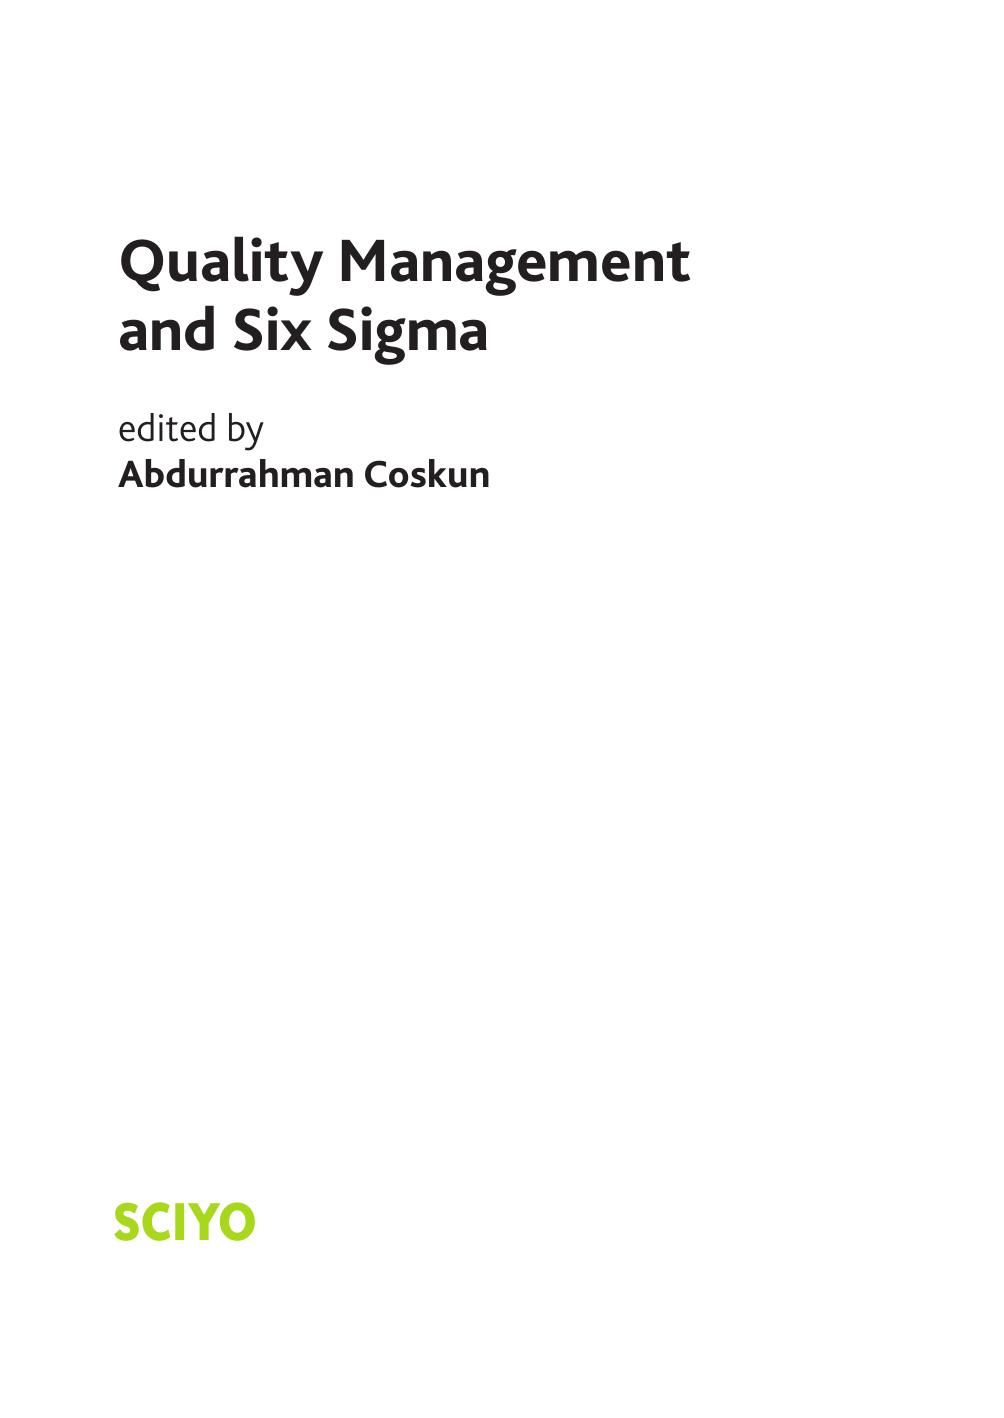 Quality Management and Six Sigma 2010.pdf